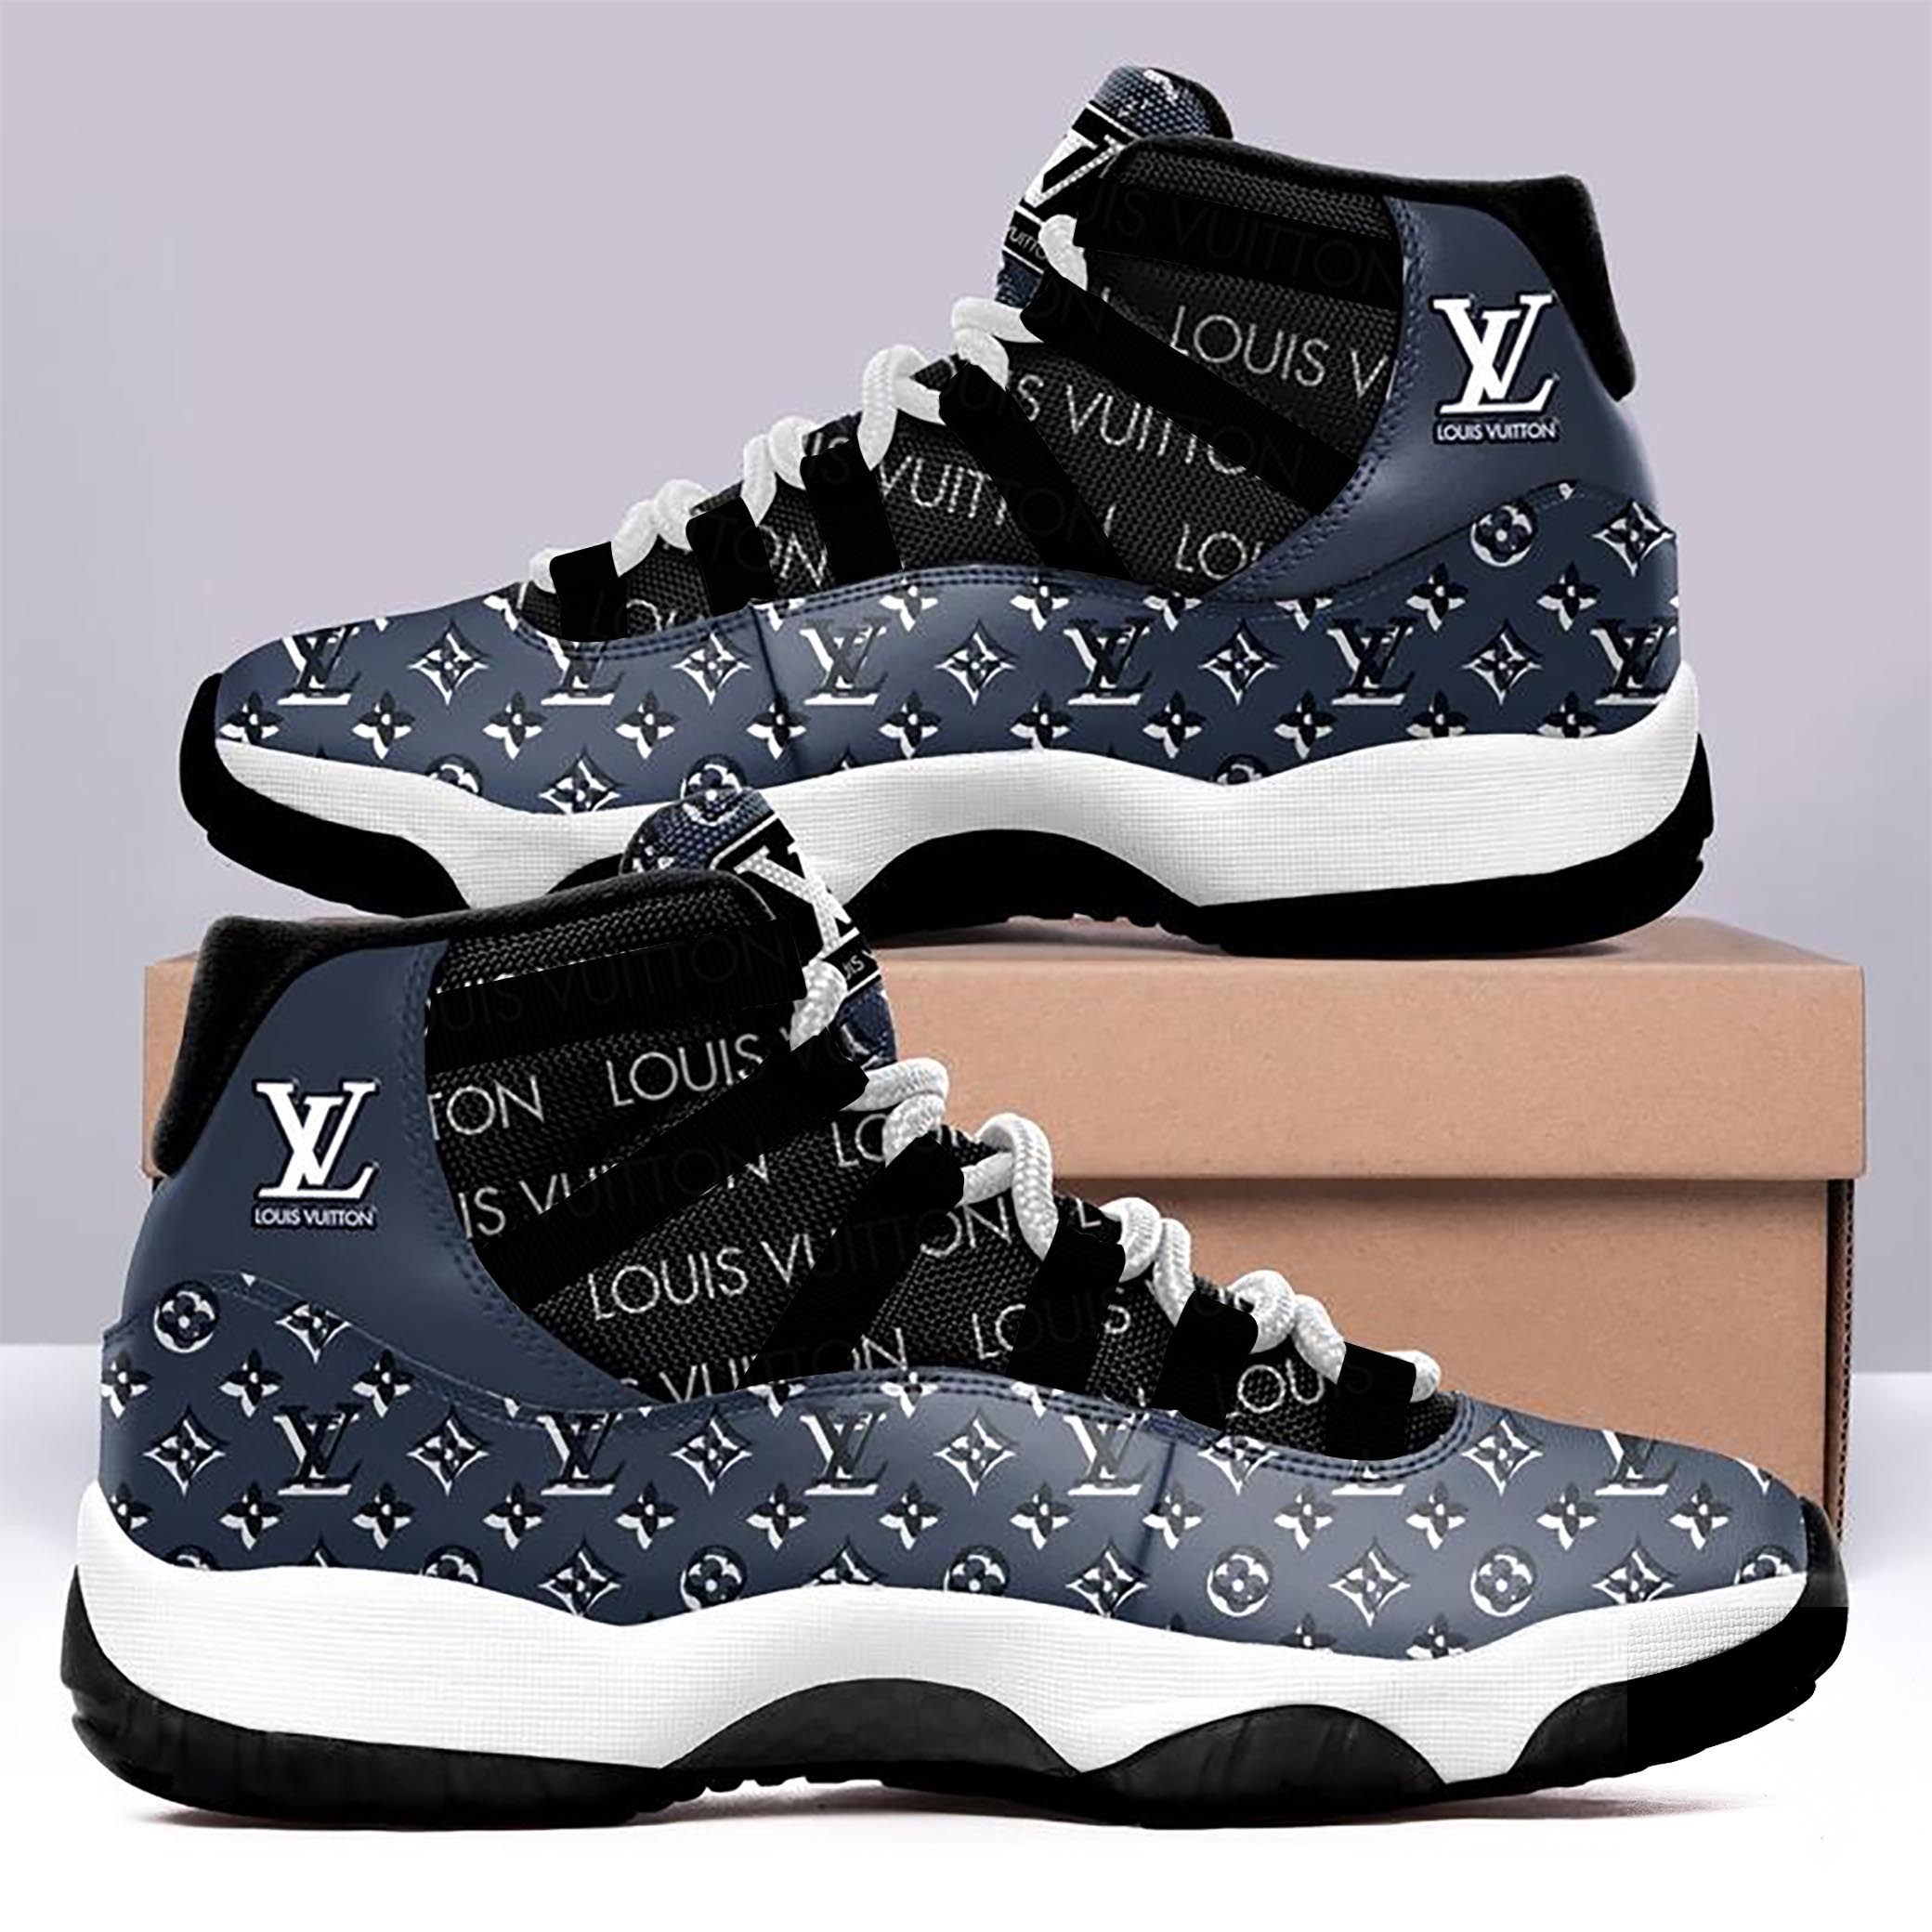 Blue Monogram Louis Vuitton Air Jordan 11 Sneakers Shoes Hot 2022 LV Gifts For Men Women HT